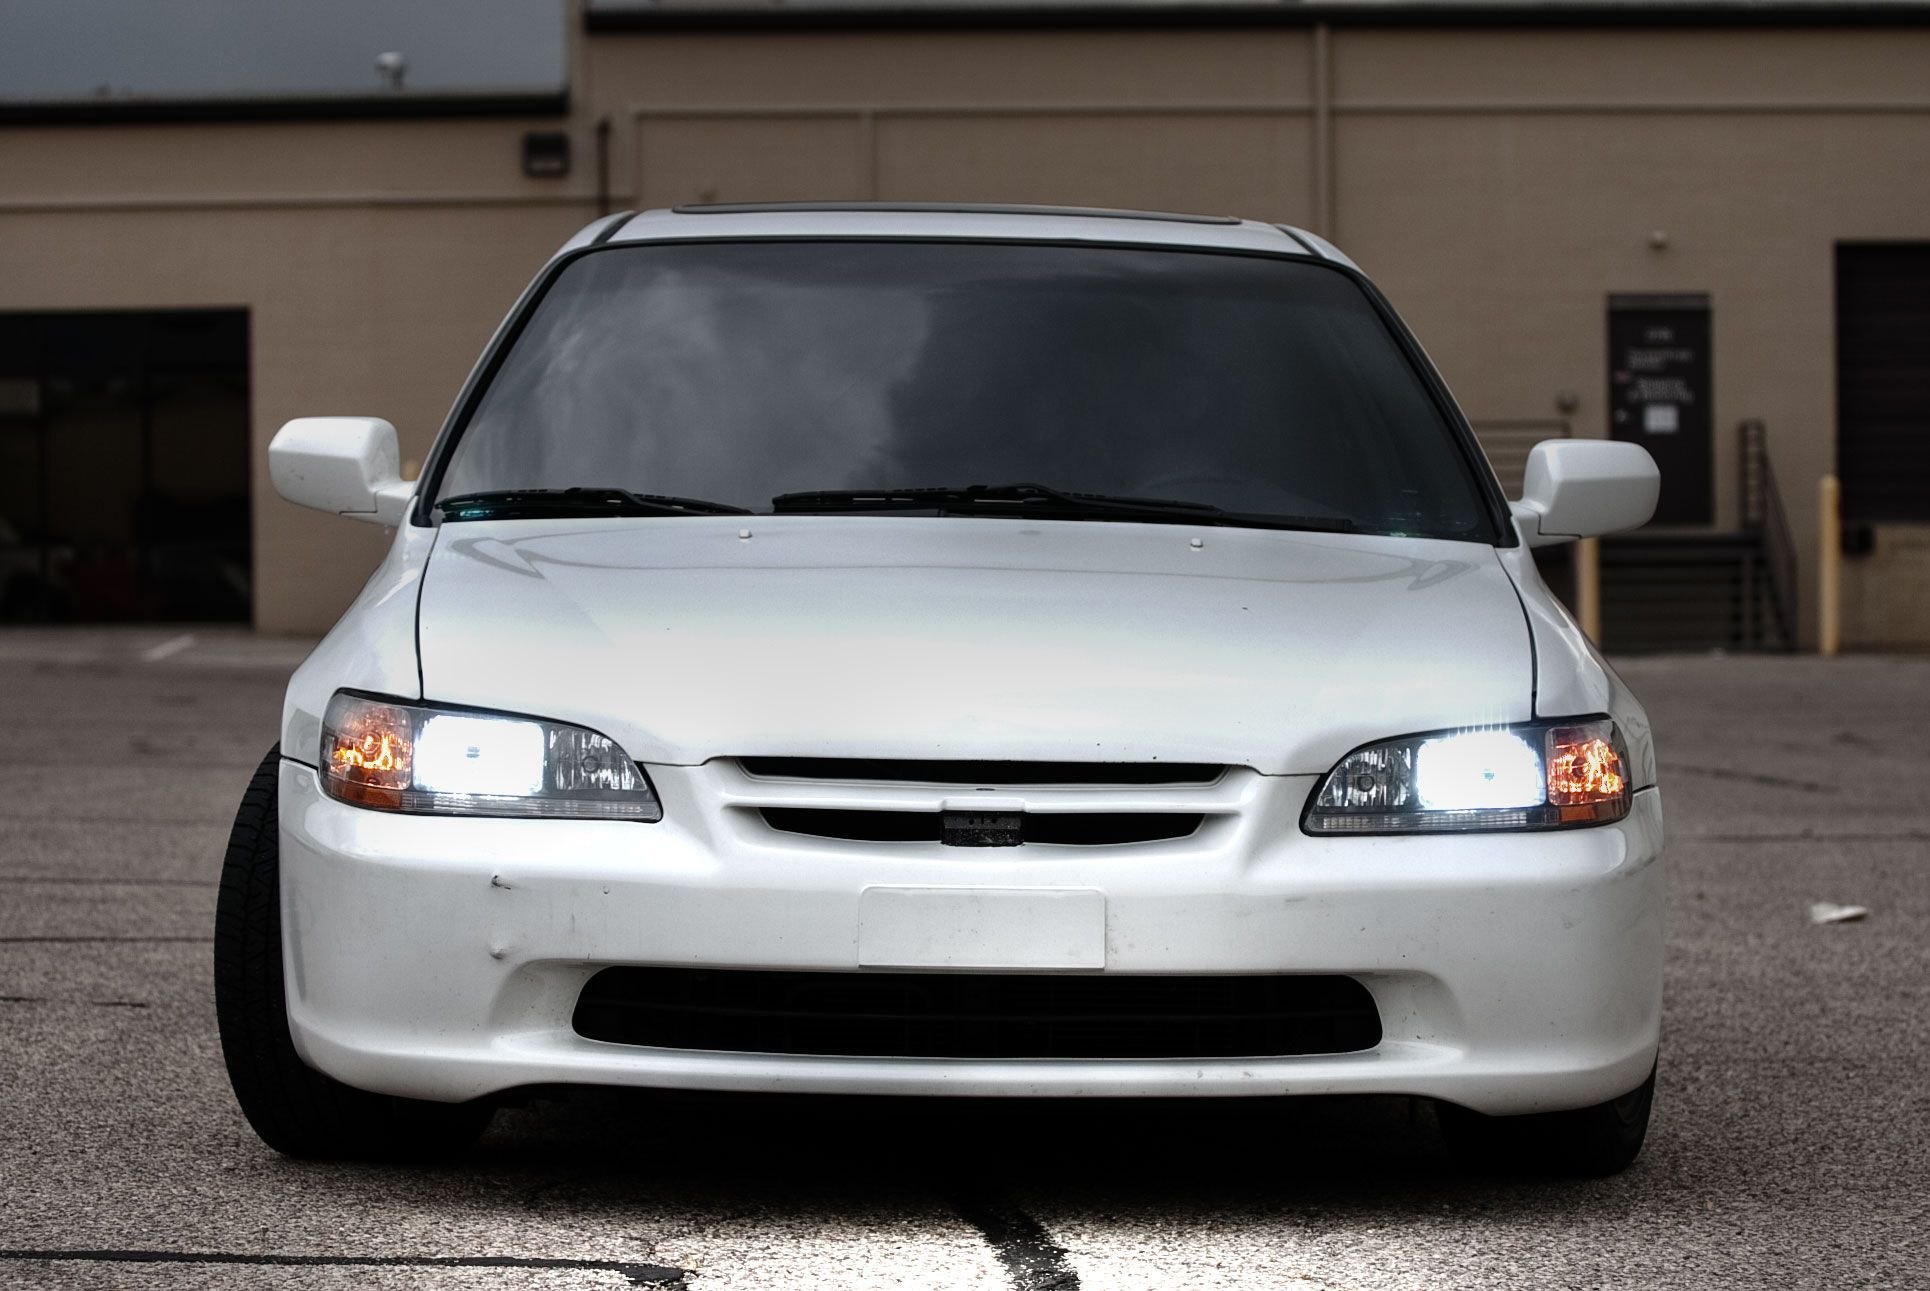 Custom Headlights on White Honda Accord - Photo by dan kinzie